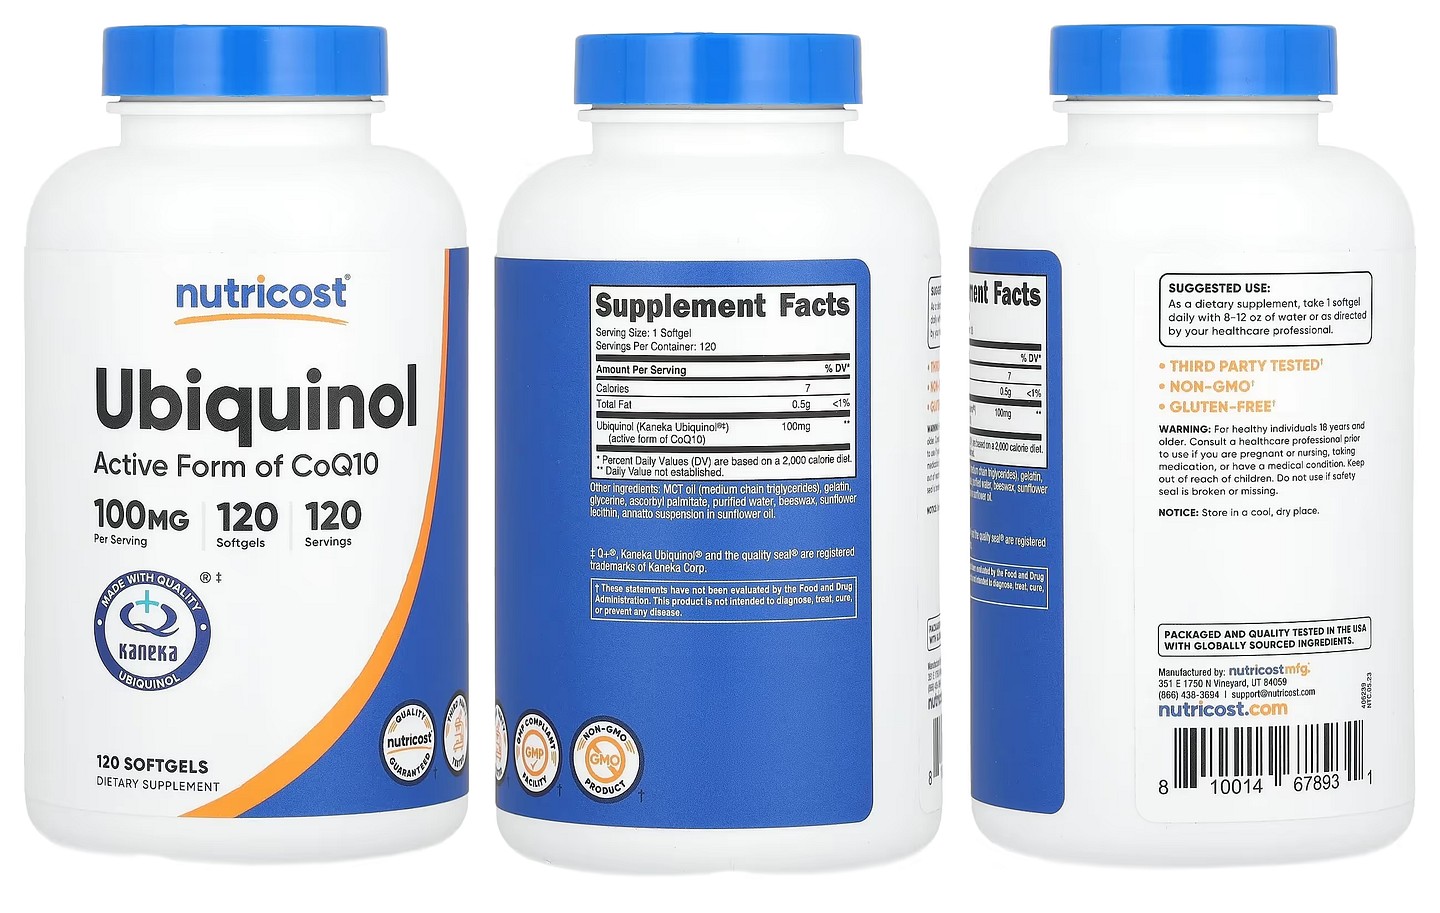 Nutricost, Ubiquinol packaging